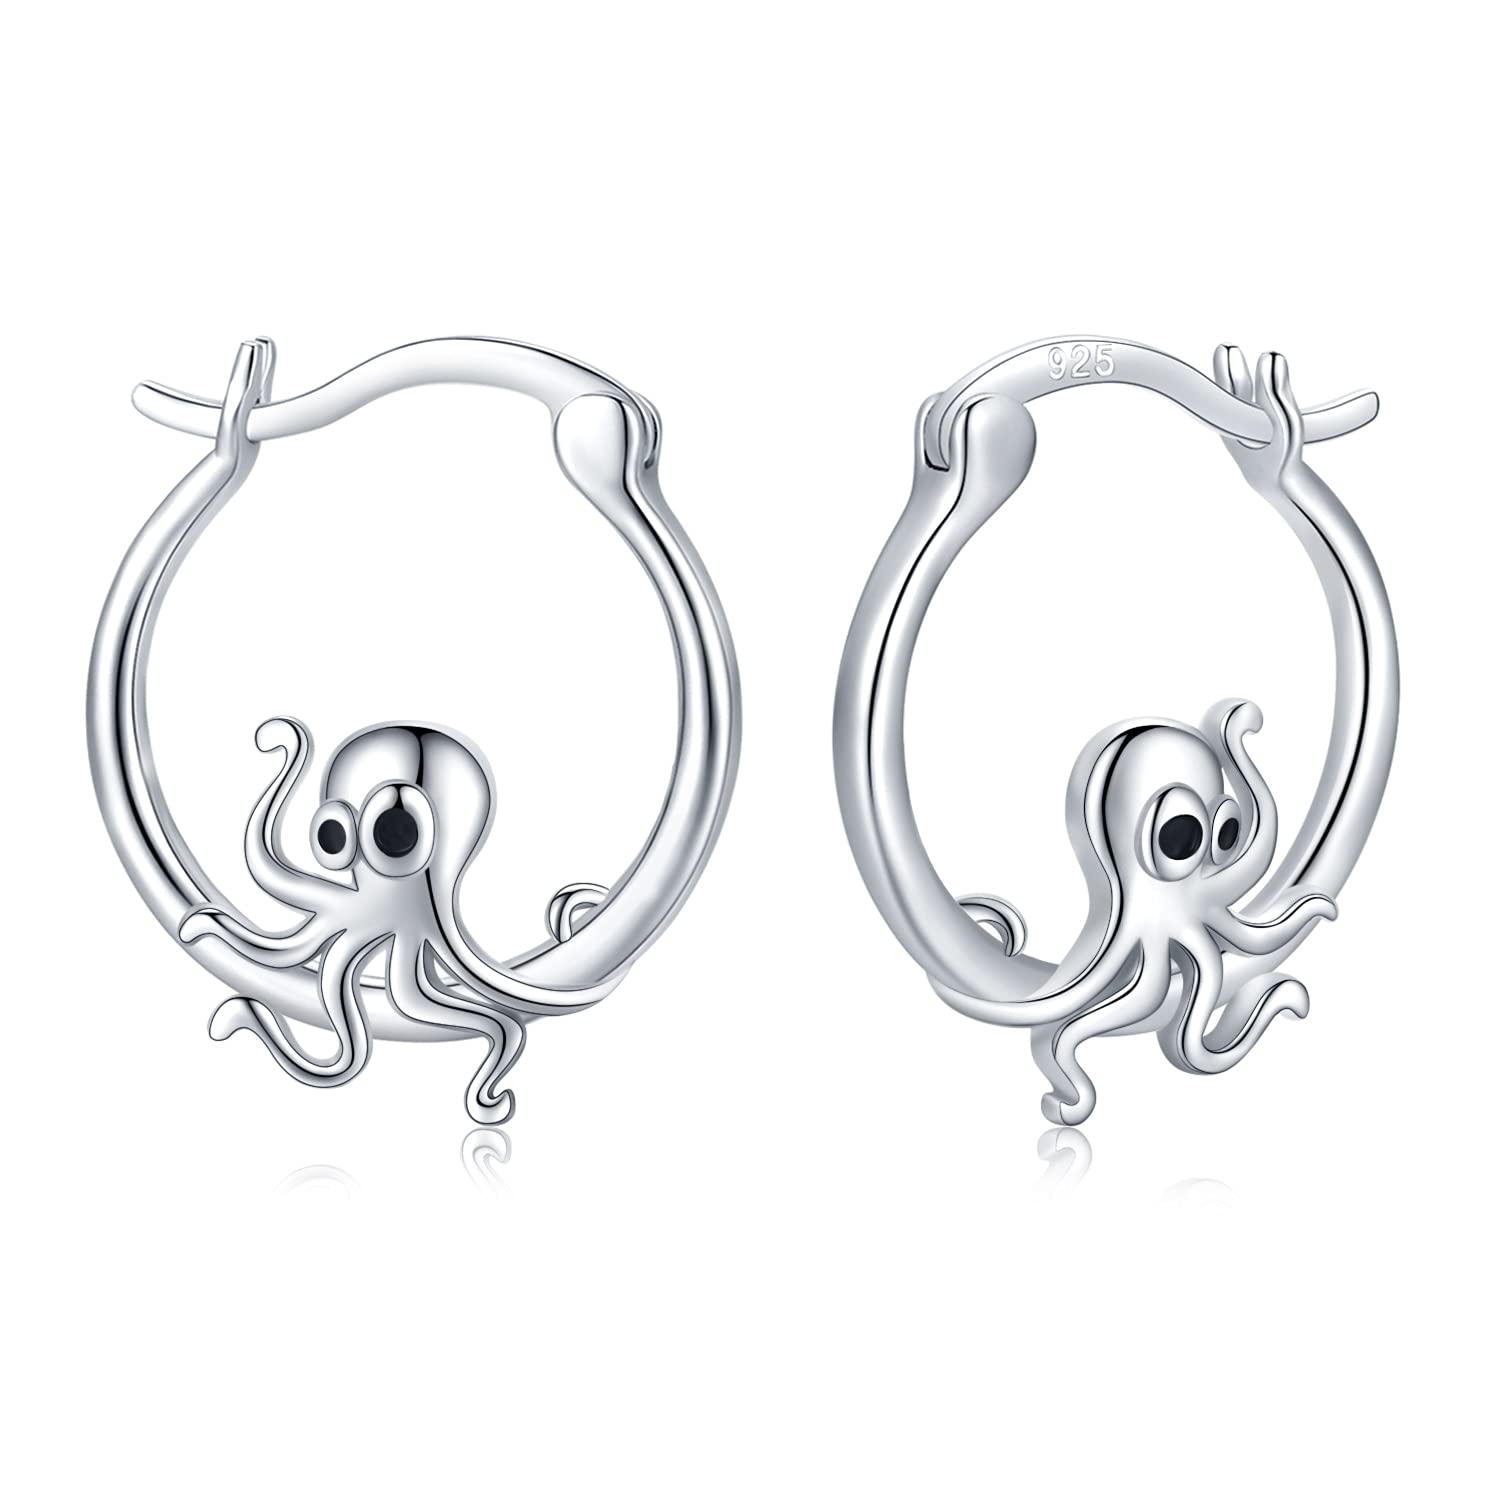 Waving Octopus earrings - Style's Bug Default Title